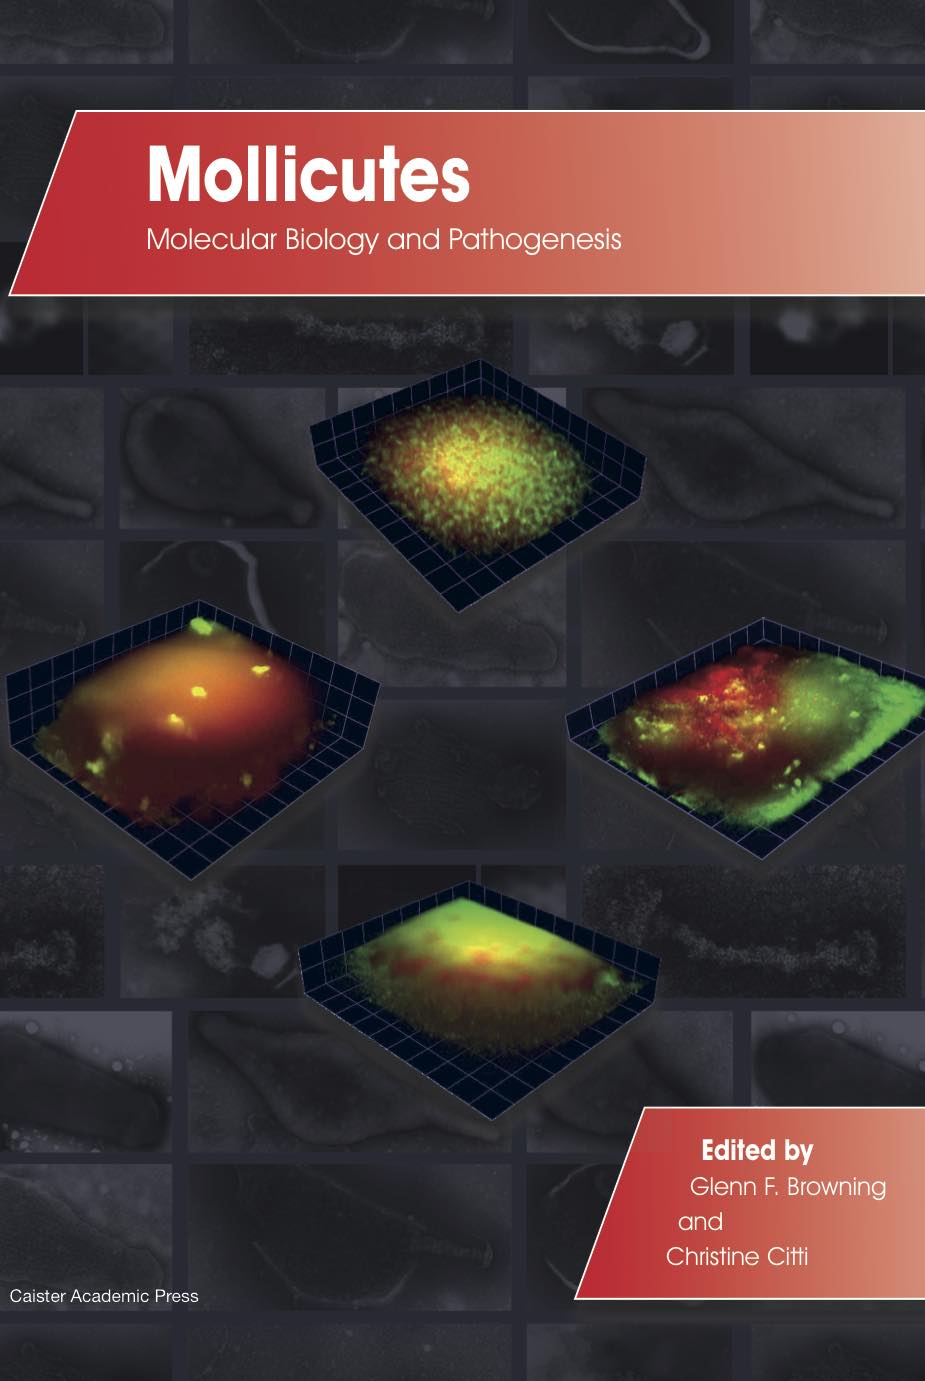 Mollicutes: Molecular Biology and Pathogenesis